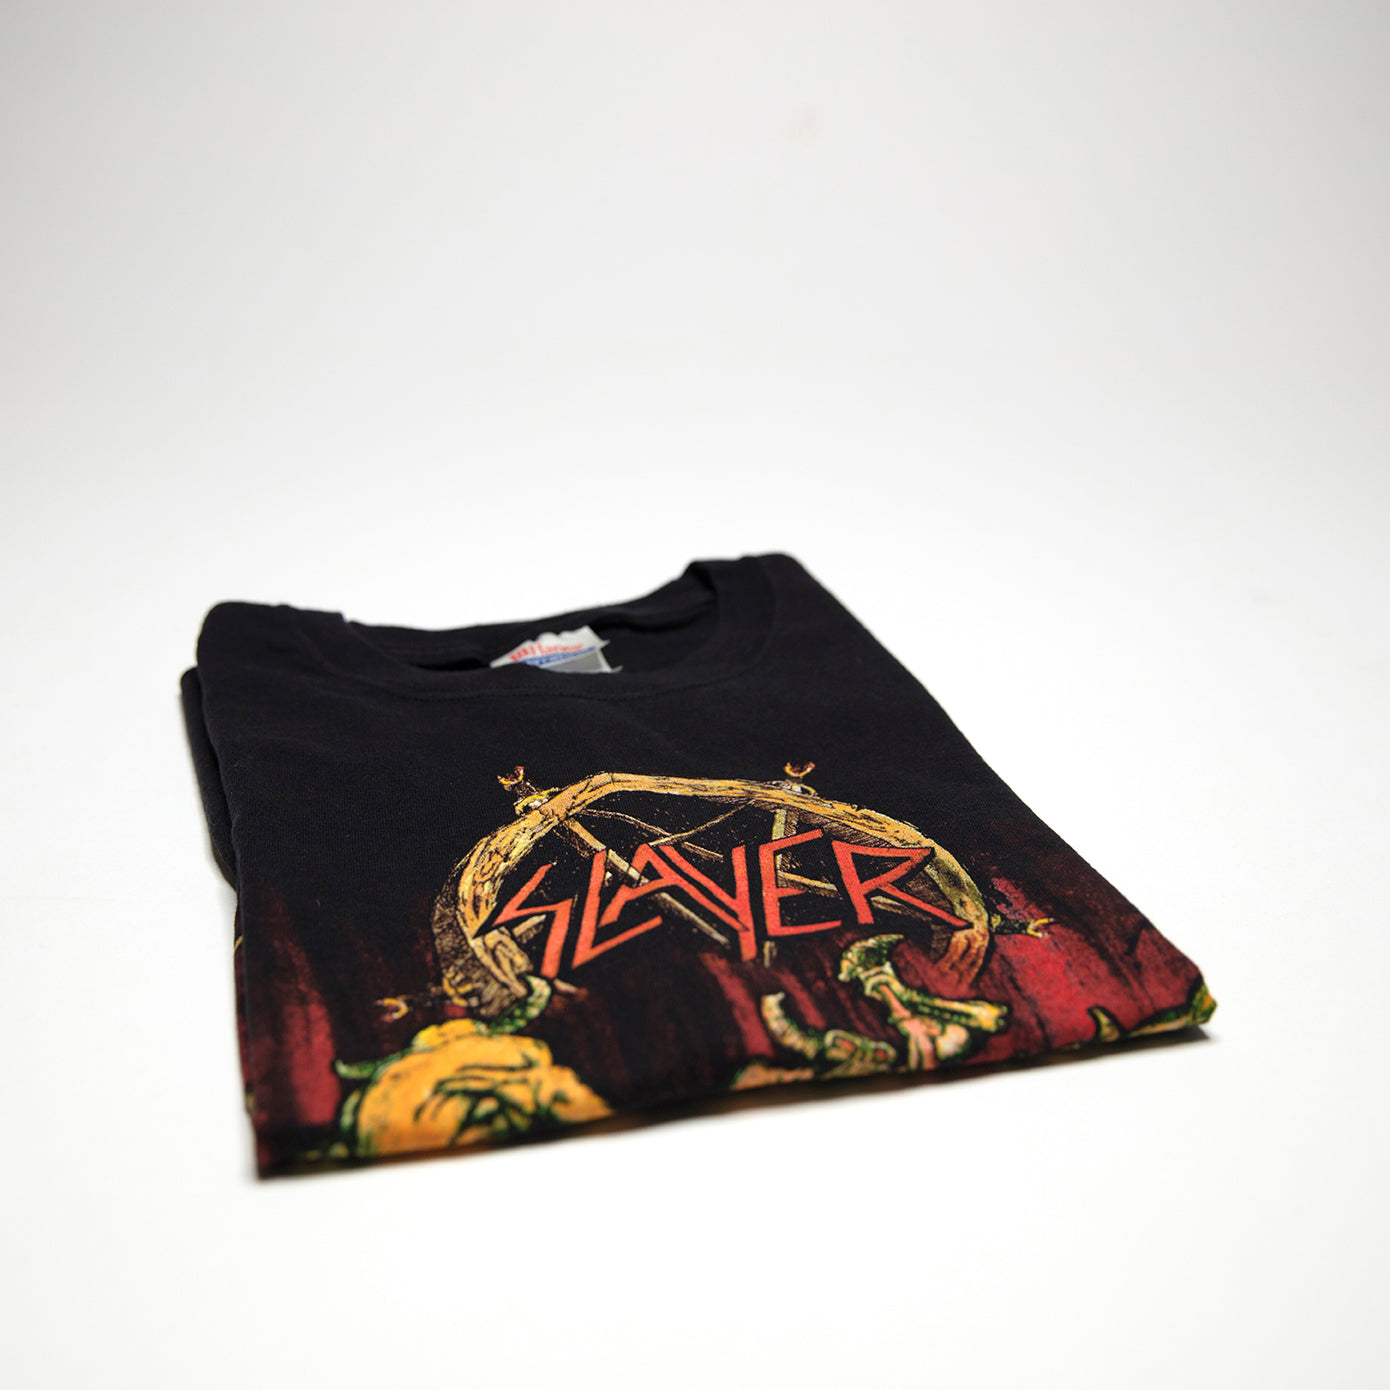 Slayer - Hell Awaits  (2004 Reprint) Tour Shirt Size Large